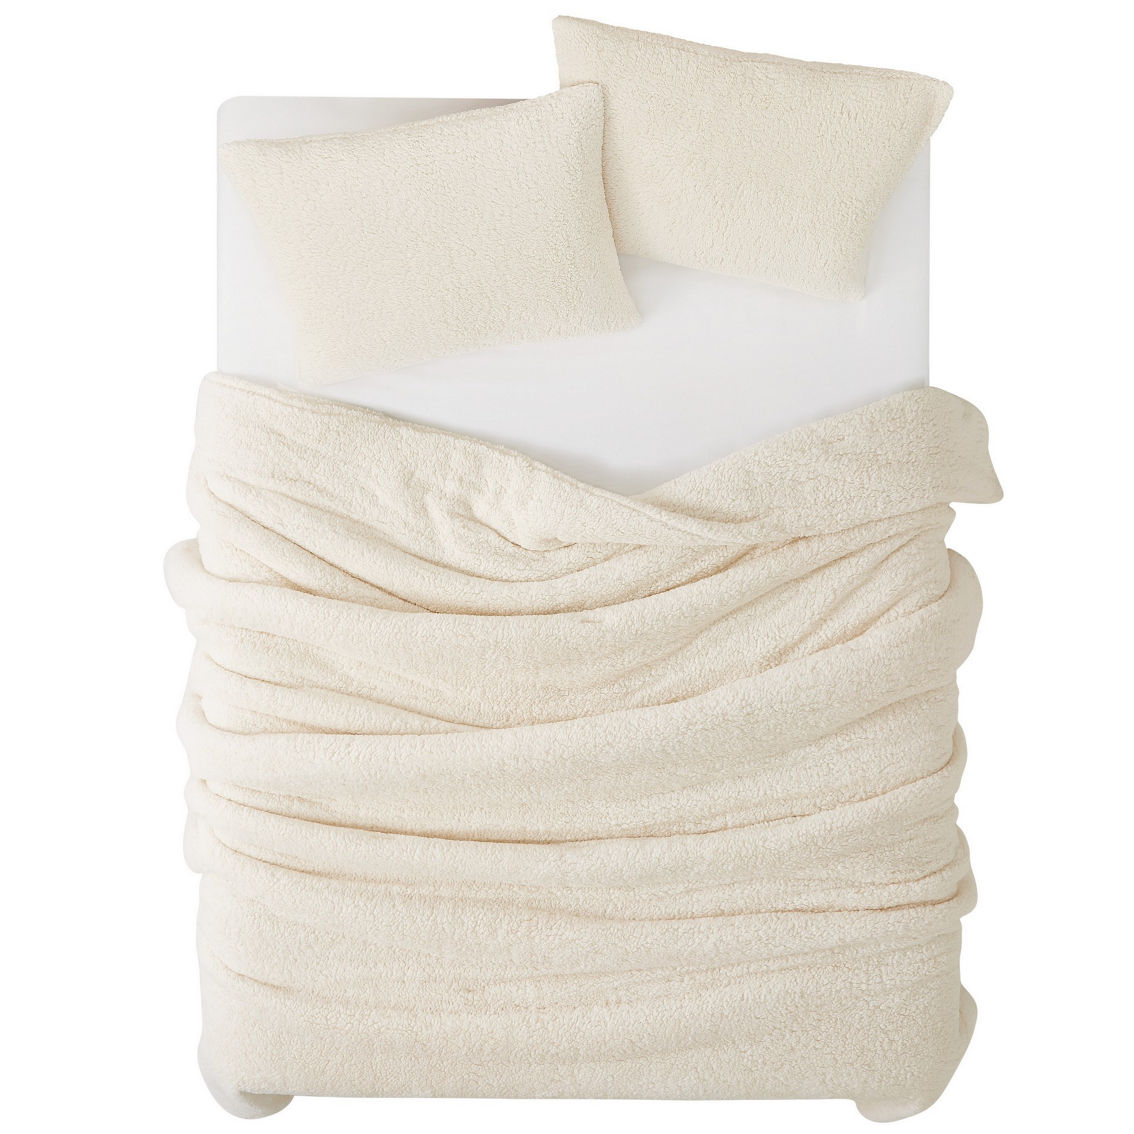 Brooklyn Loom Marshmallow Sherpa Comforter Set - Image 2 of 5